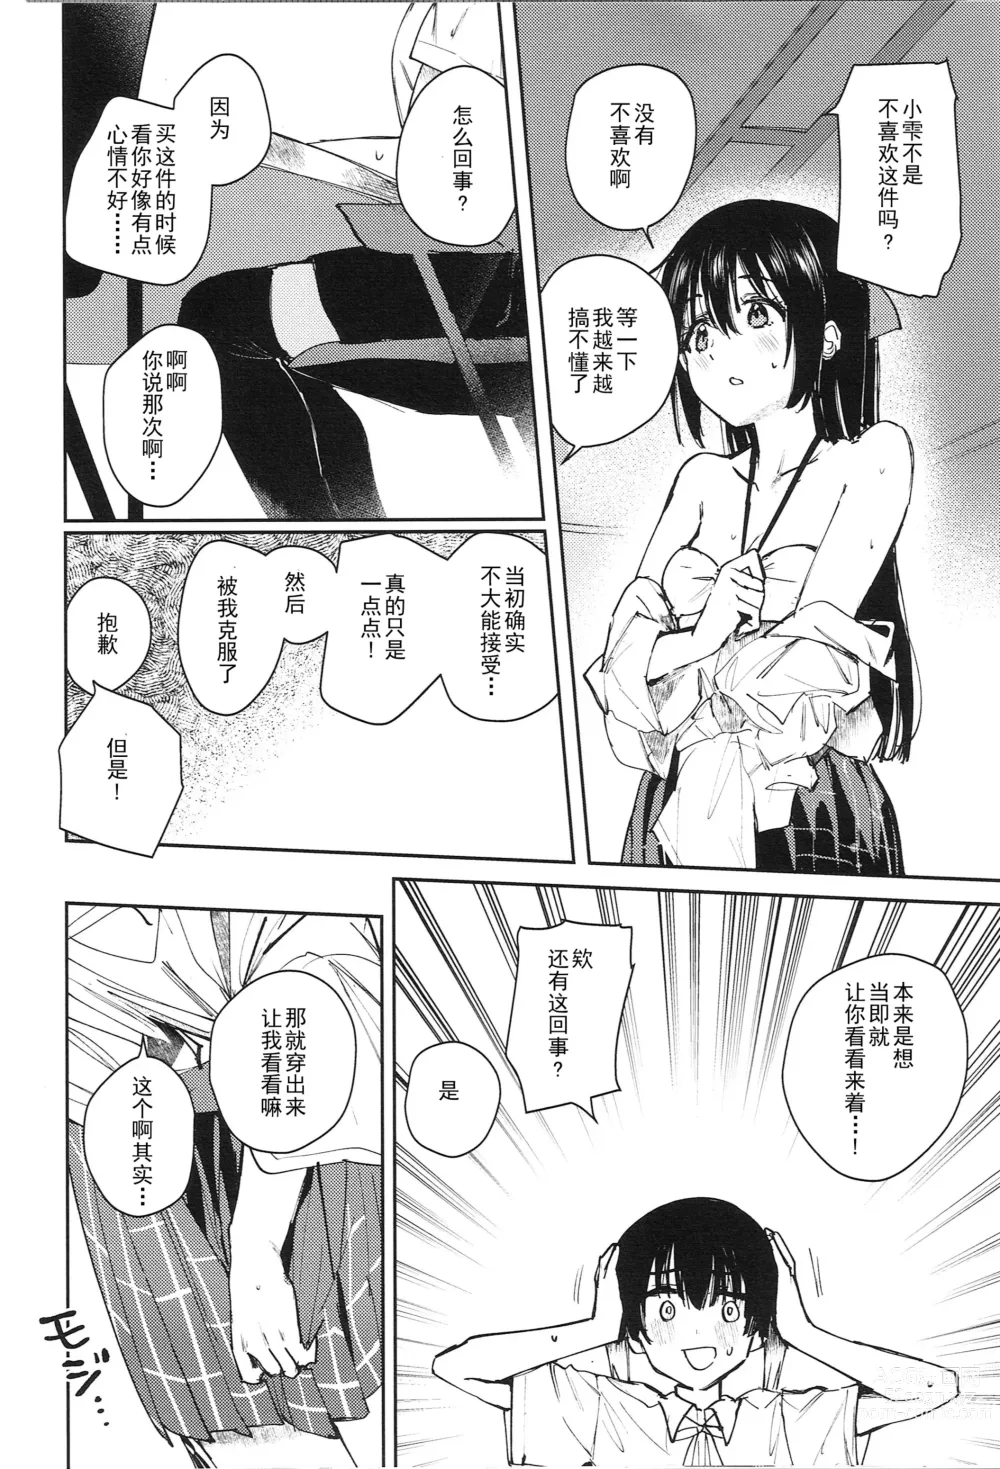 Page 14 of doujinshi Aoku Iroasero